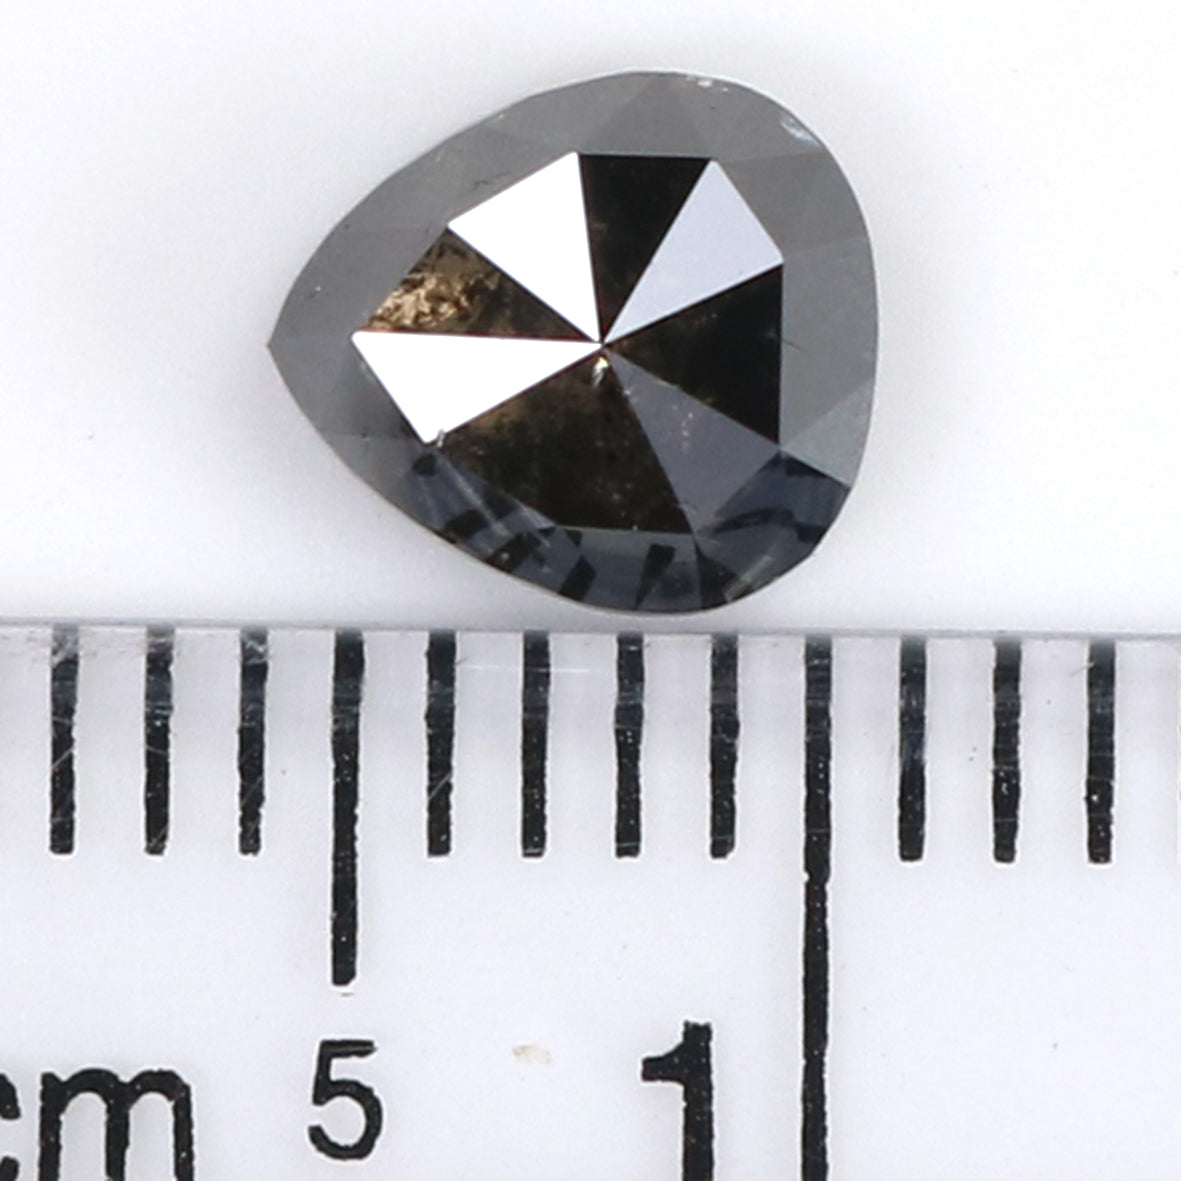 1.23 CT Natural Loose Pear Shape Diamond Salt And Pepper Pear Cut Diamond 6.50 MM Natural Black Grey Color Pear Brilliant Cut Diamond KQ1806